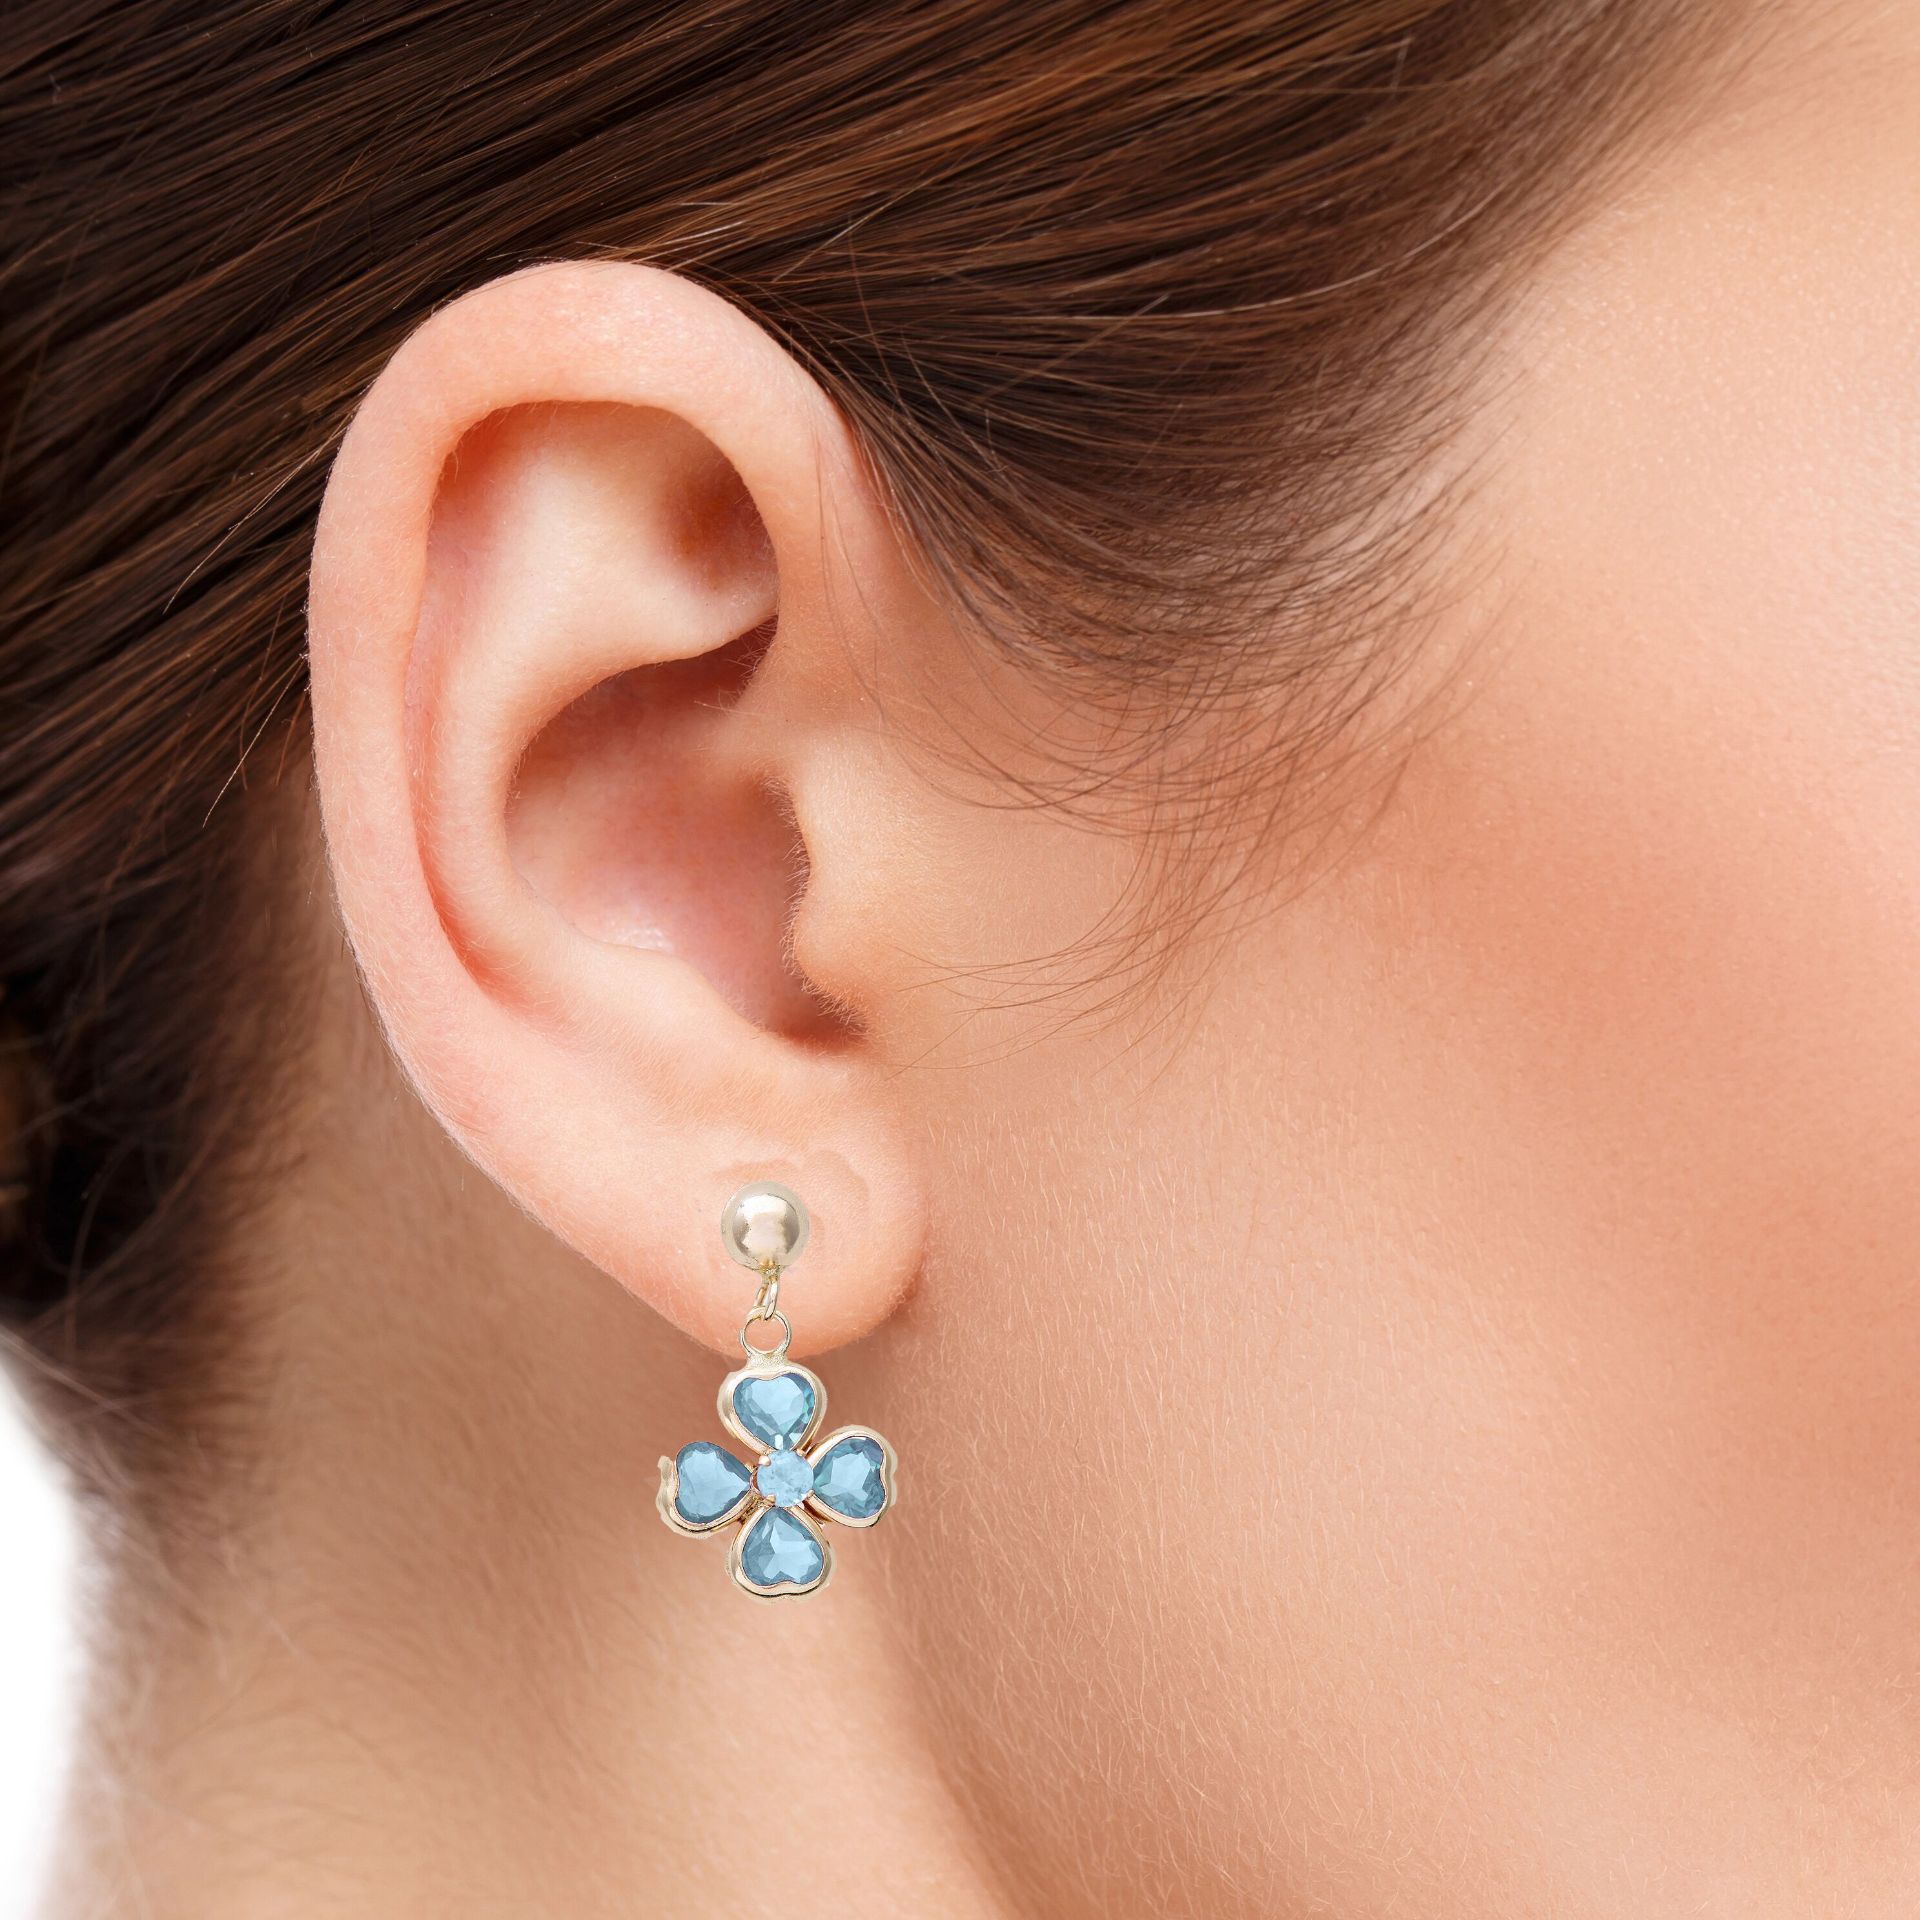 Blue Topaz Natural Gemstone Flower Shaped Earrings - Image 2 of 4